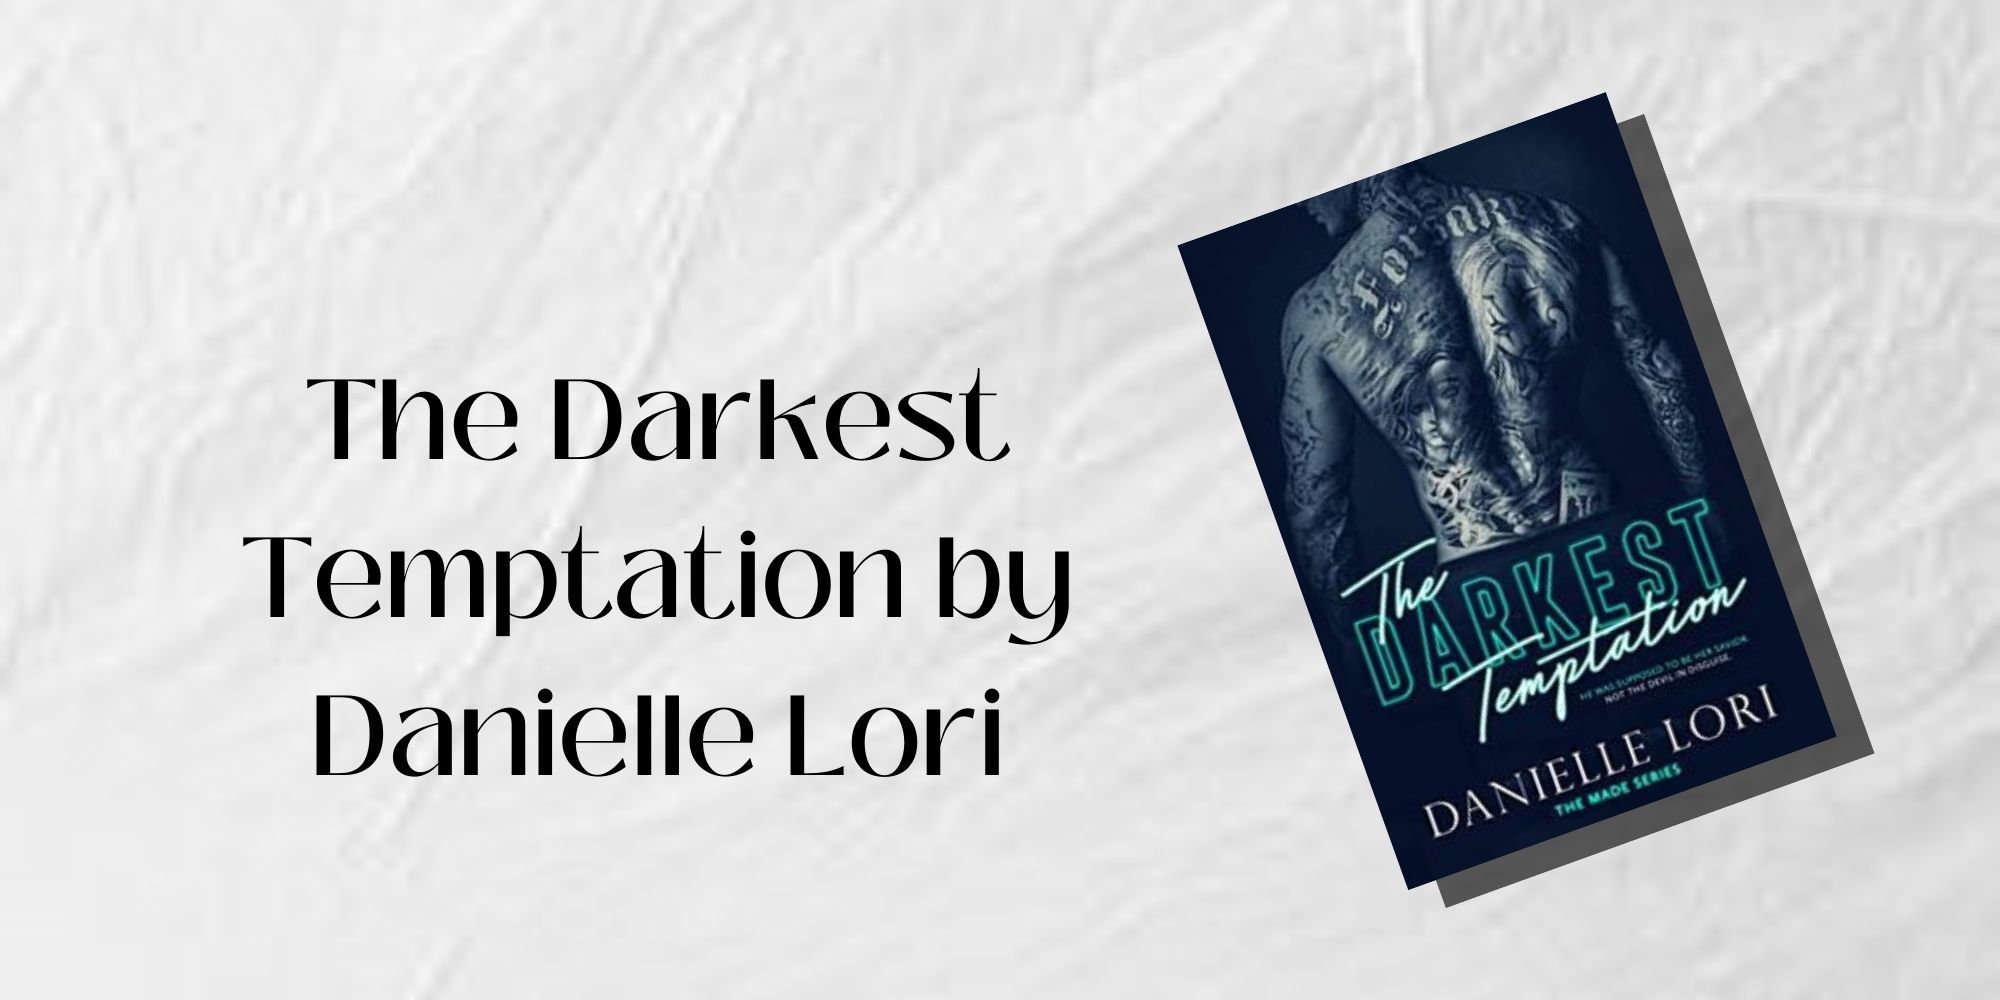 The cover of The Darkest Temptation by Danielle Lori